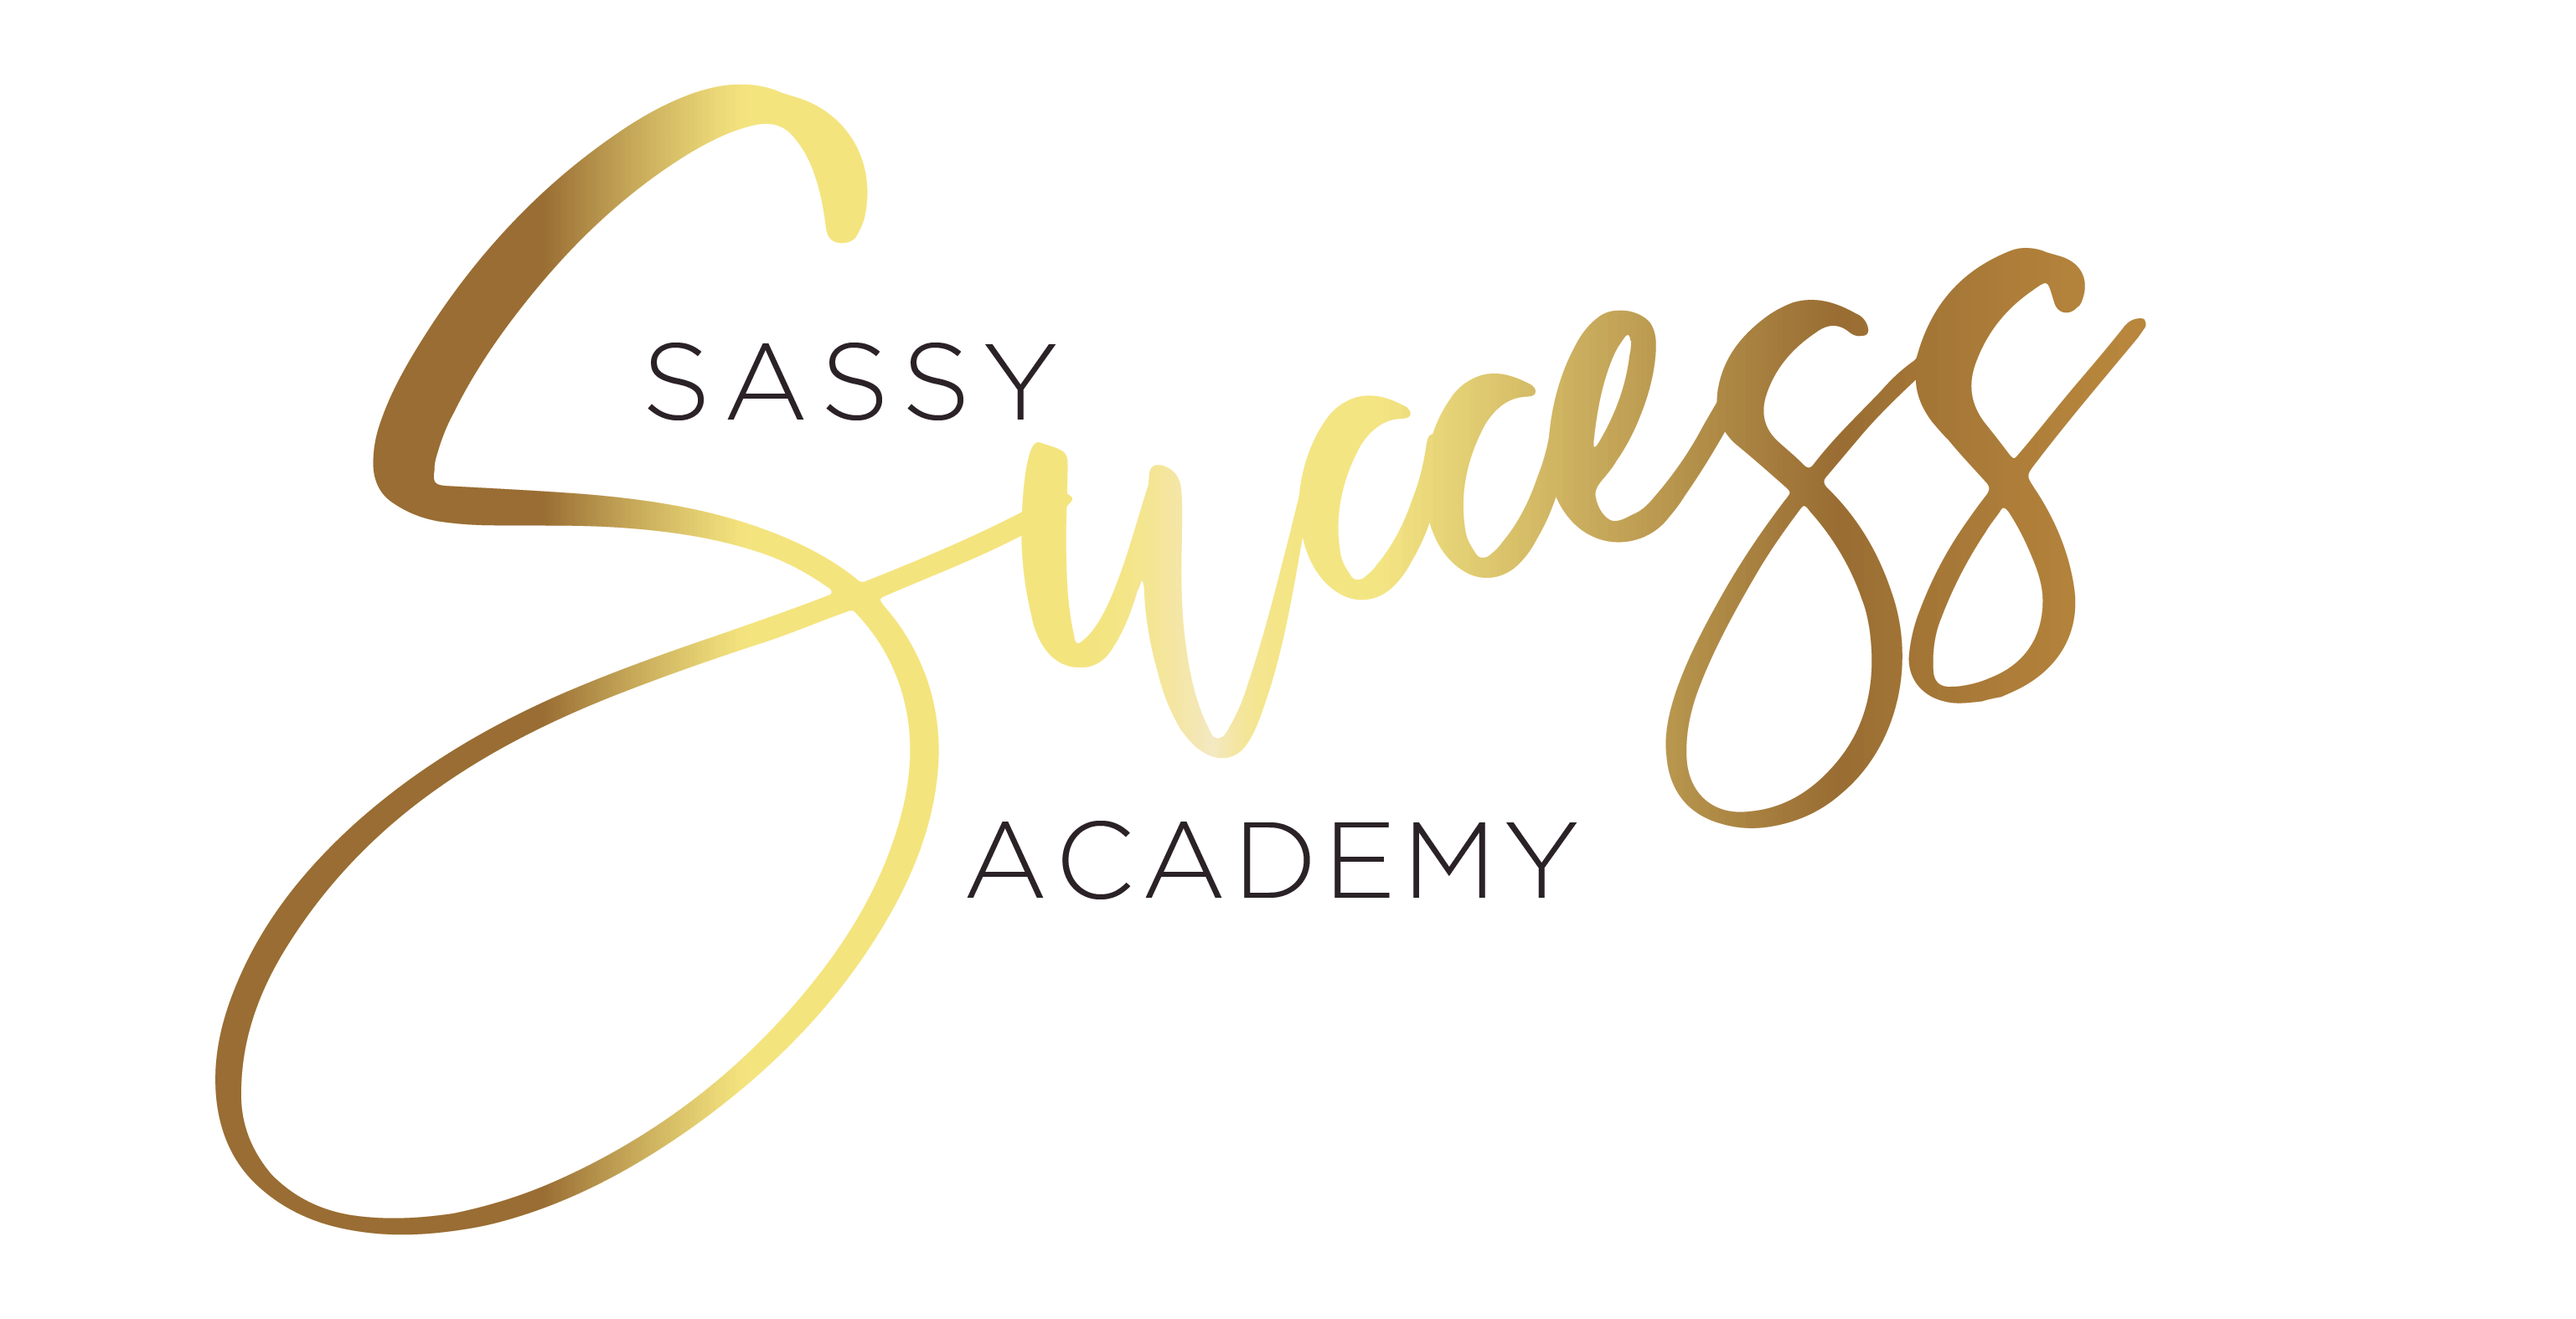 Sassy Success Academy